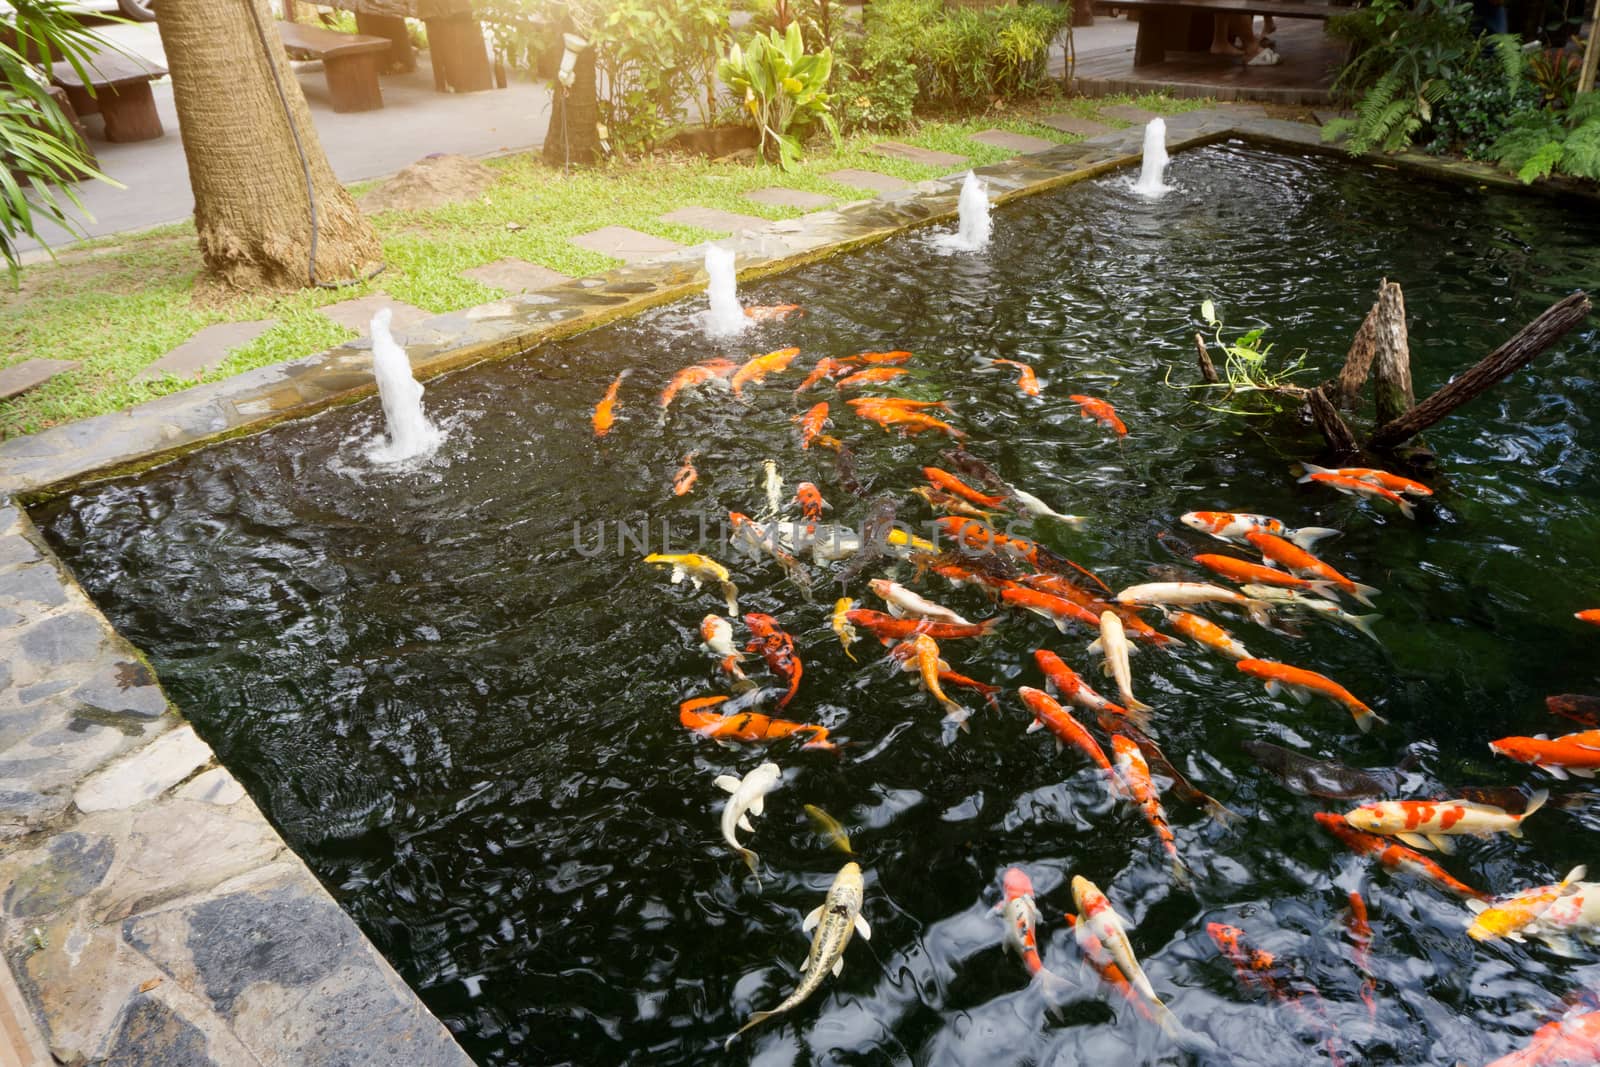 Many Fancy carp or Called Koi fish swimming in carp pond. Sun light filter effect.